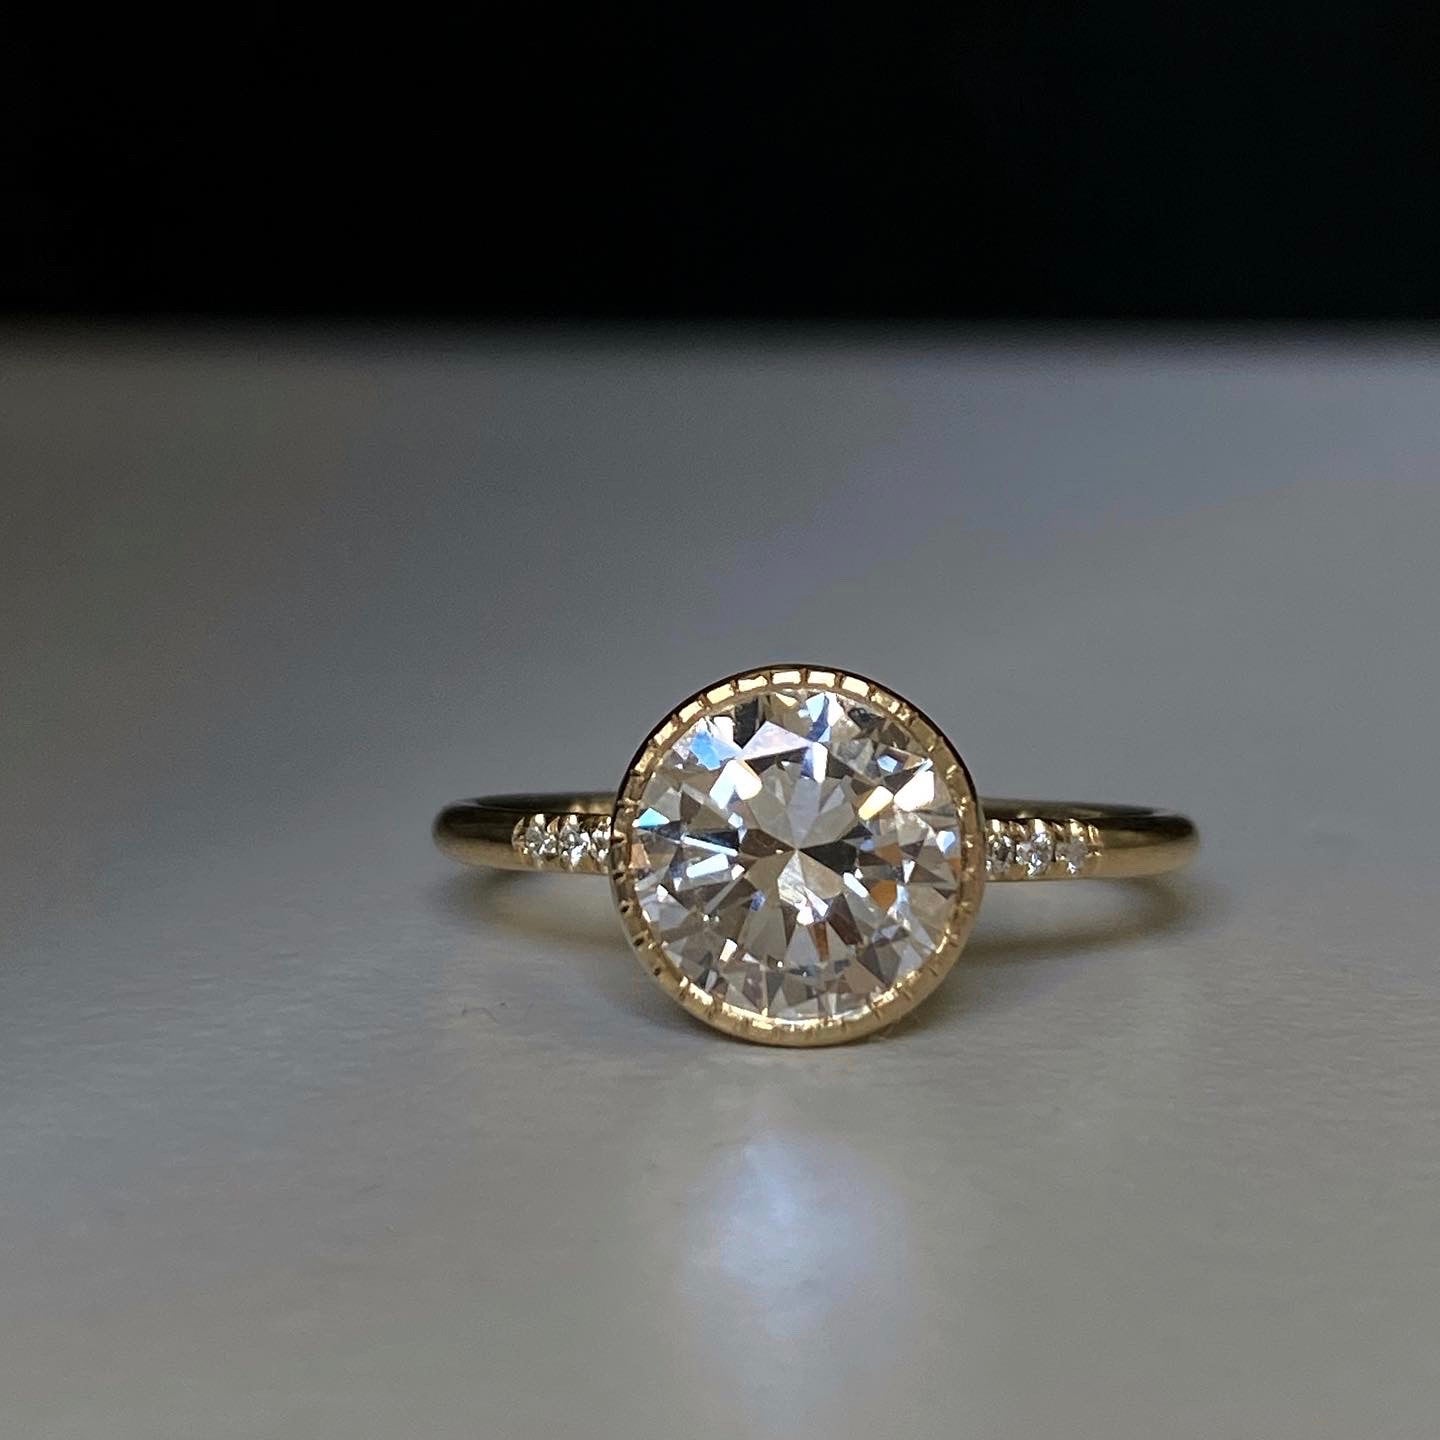 14k yellow gold custom engagement ring with white diamond round cut center stone and milgrain detail and pave white diamonds